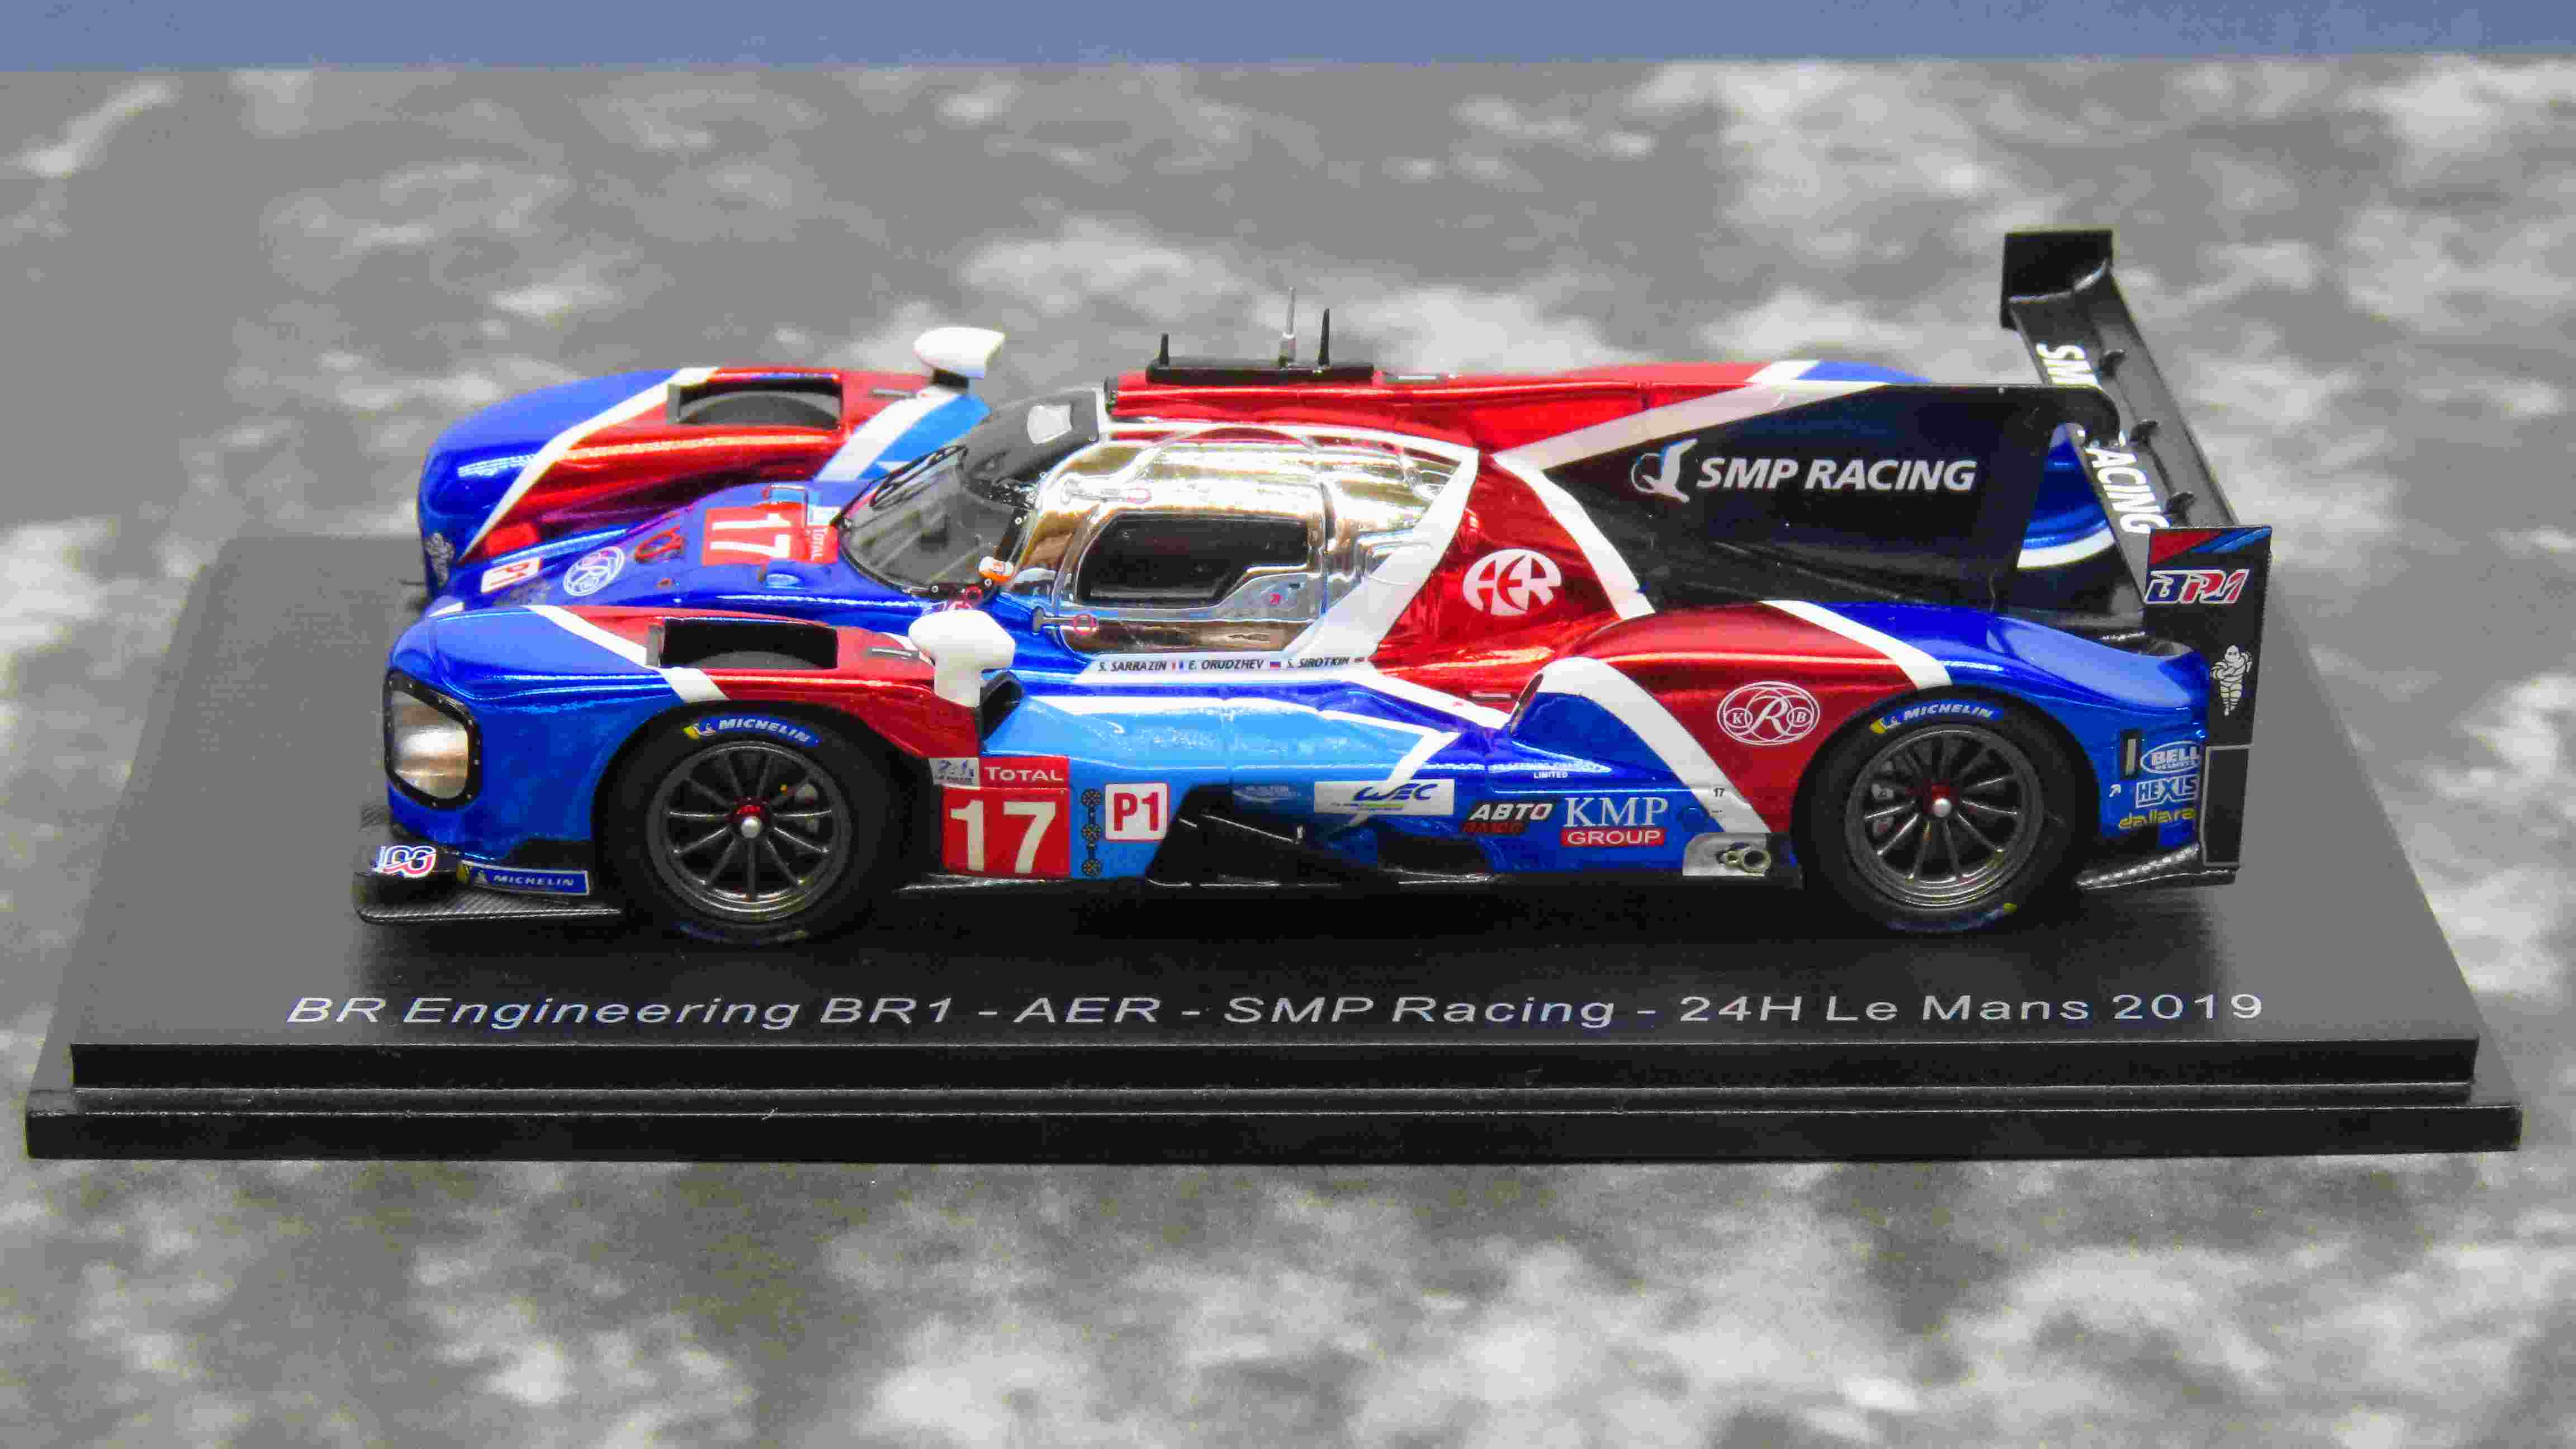 BR Engineering BR1 - AER No.17 SMP Racing 24H Le Mans 2019 - S. Sarrazin - E. Orudzhev - S. Sirotkin /Spark S7907 1:43/